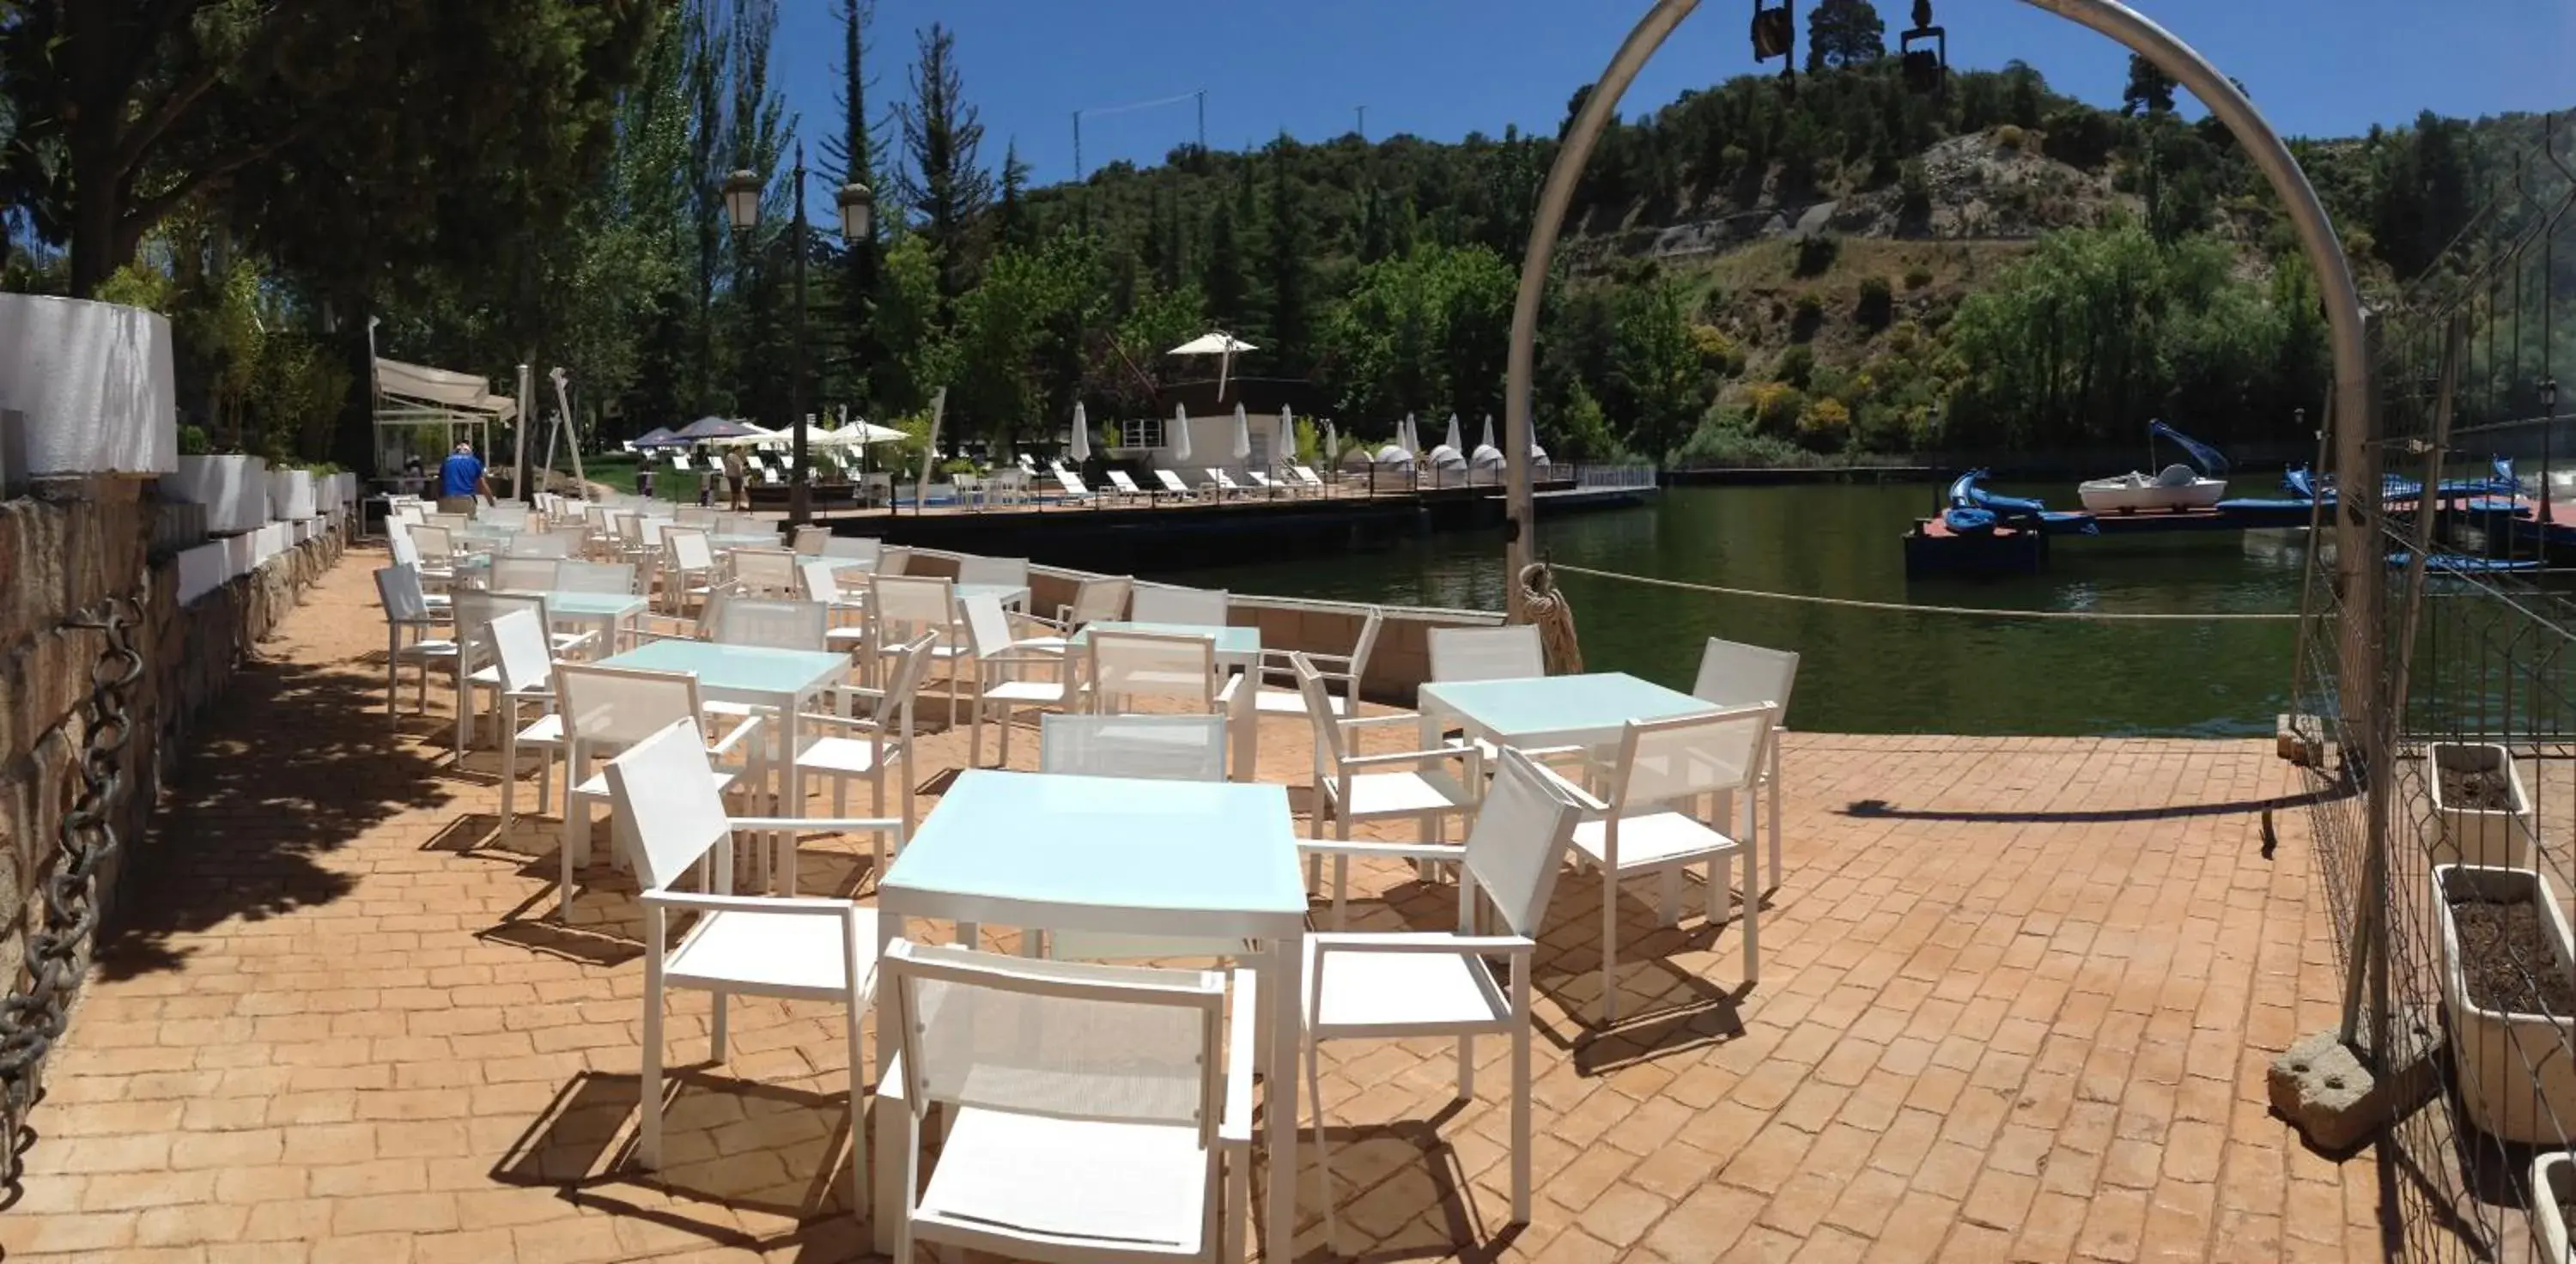 Area and facilities, Restaurant/Places to Eat in Segovia Sierra de Guadarrama